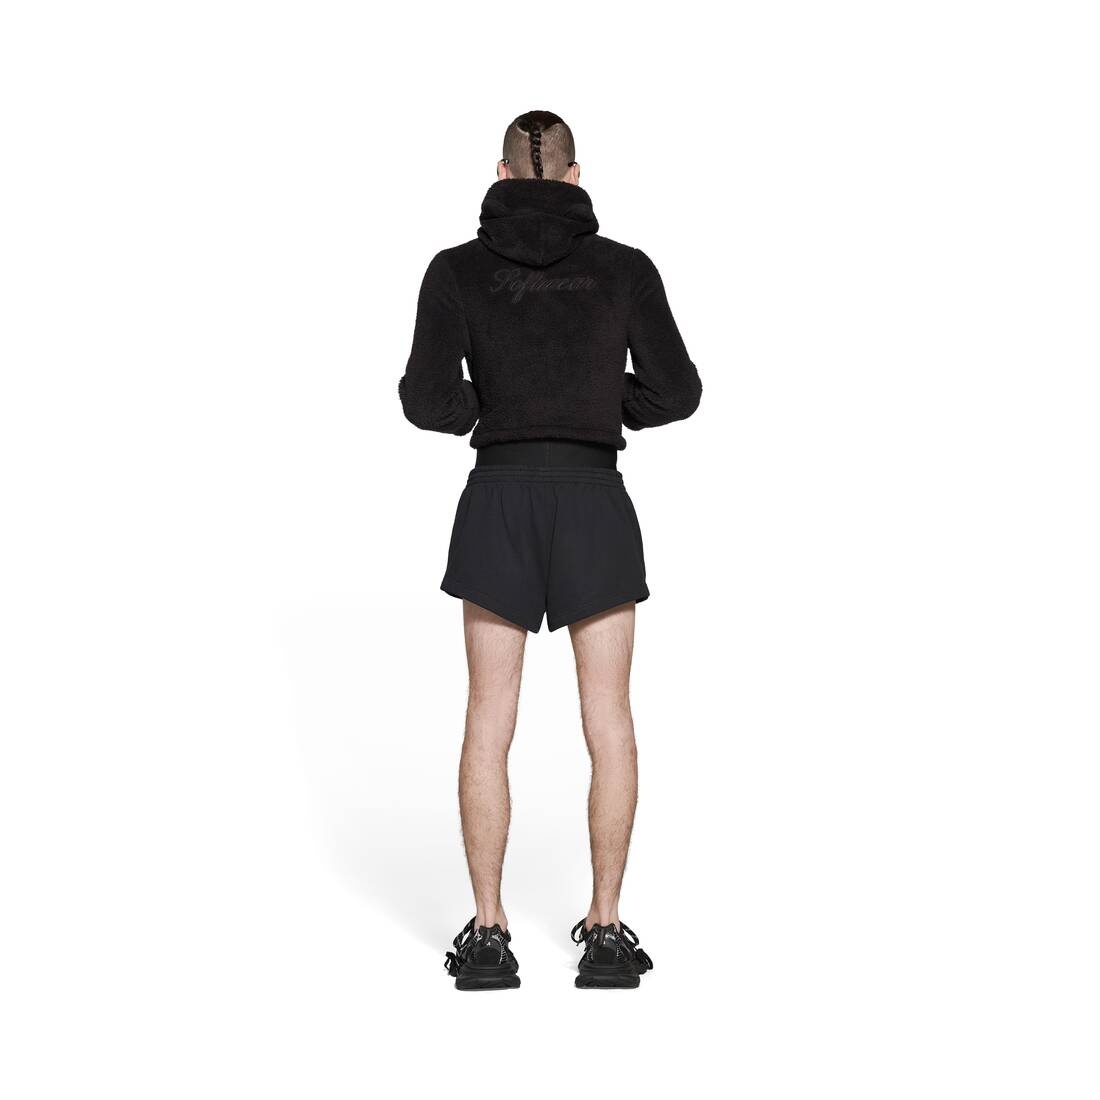 Running Shorts in Black Faded - 4